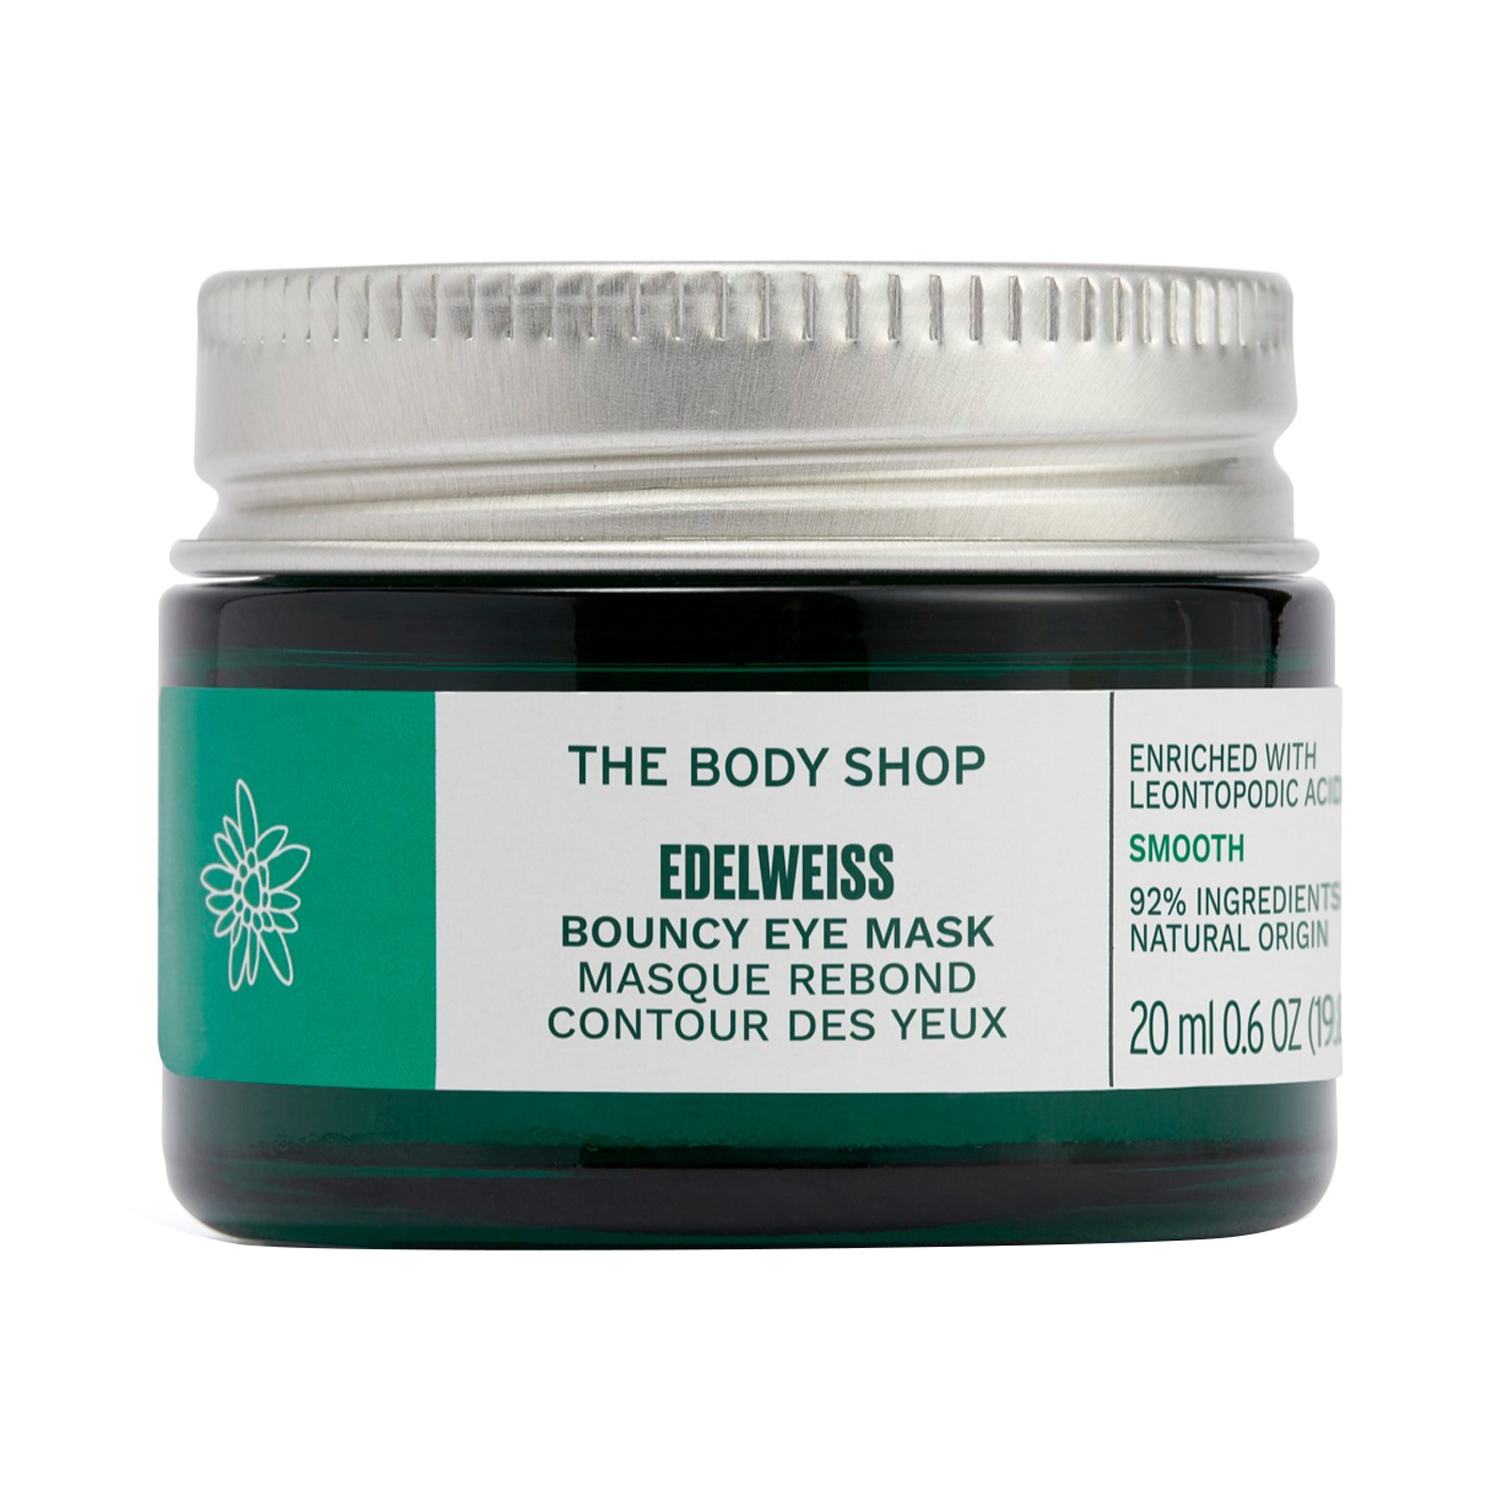 The Body Shop | The Body Shop Edelweiss Bouncy Eye Mask (20ml)